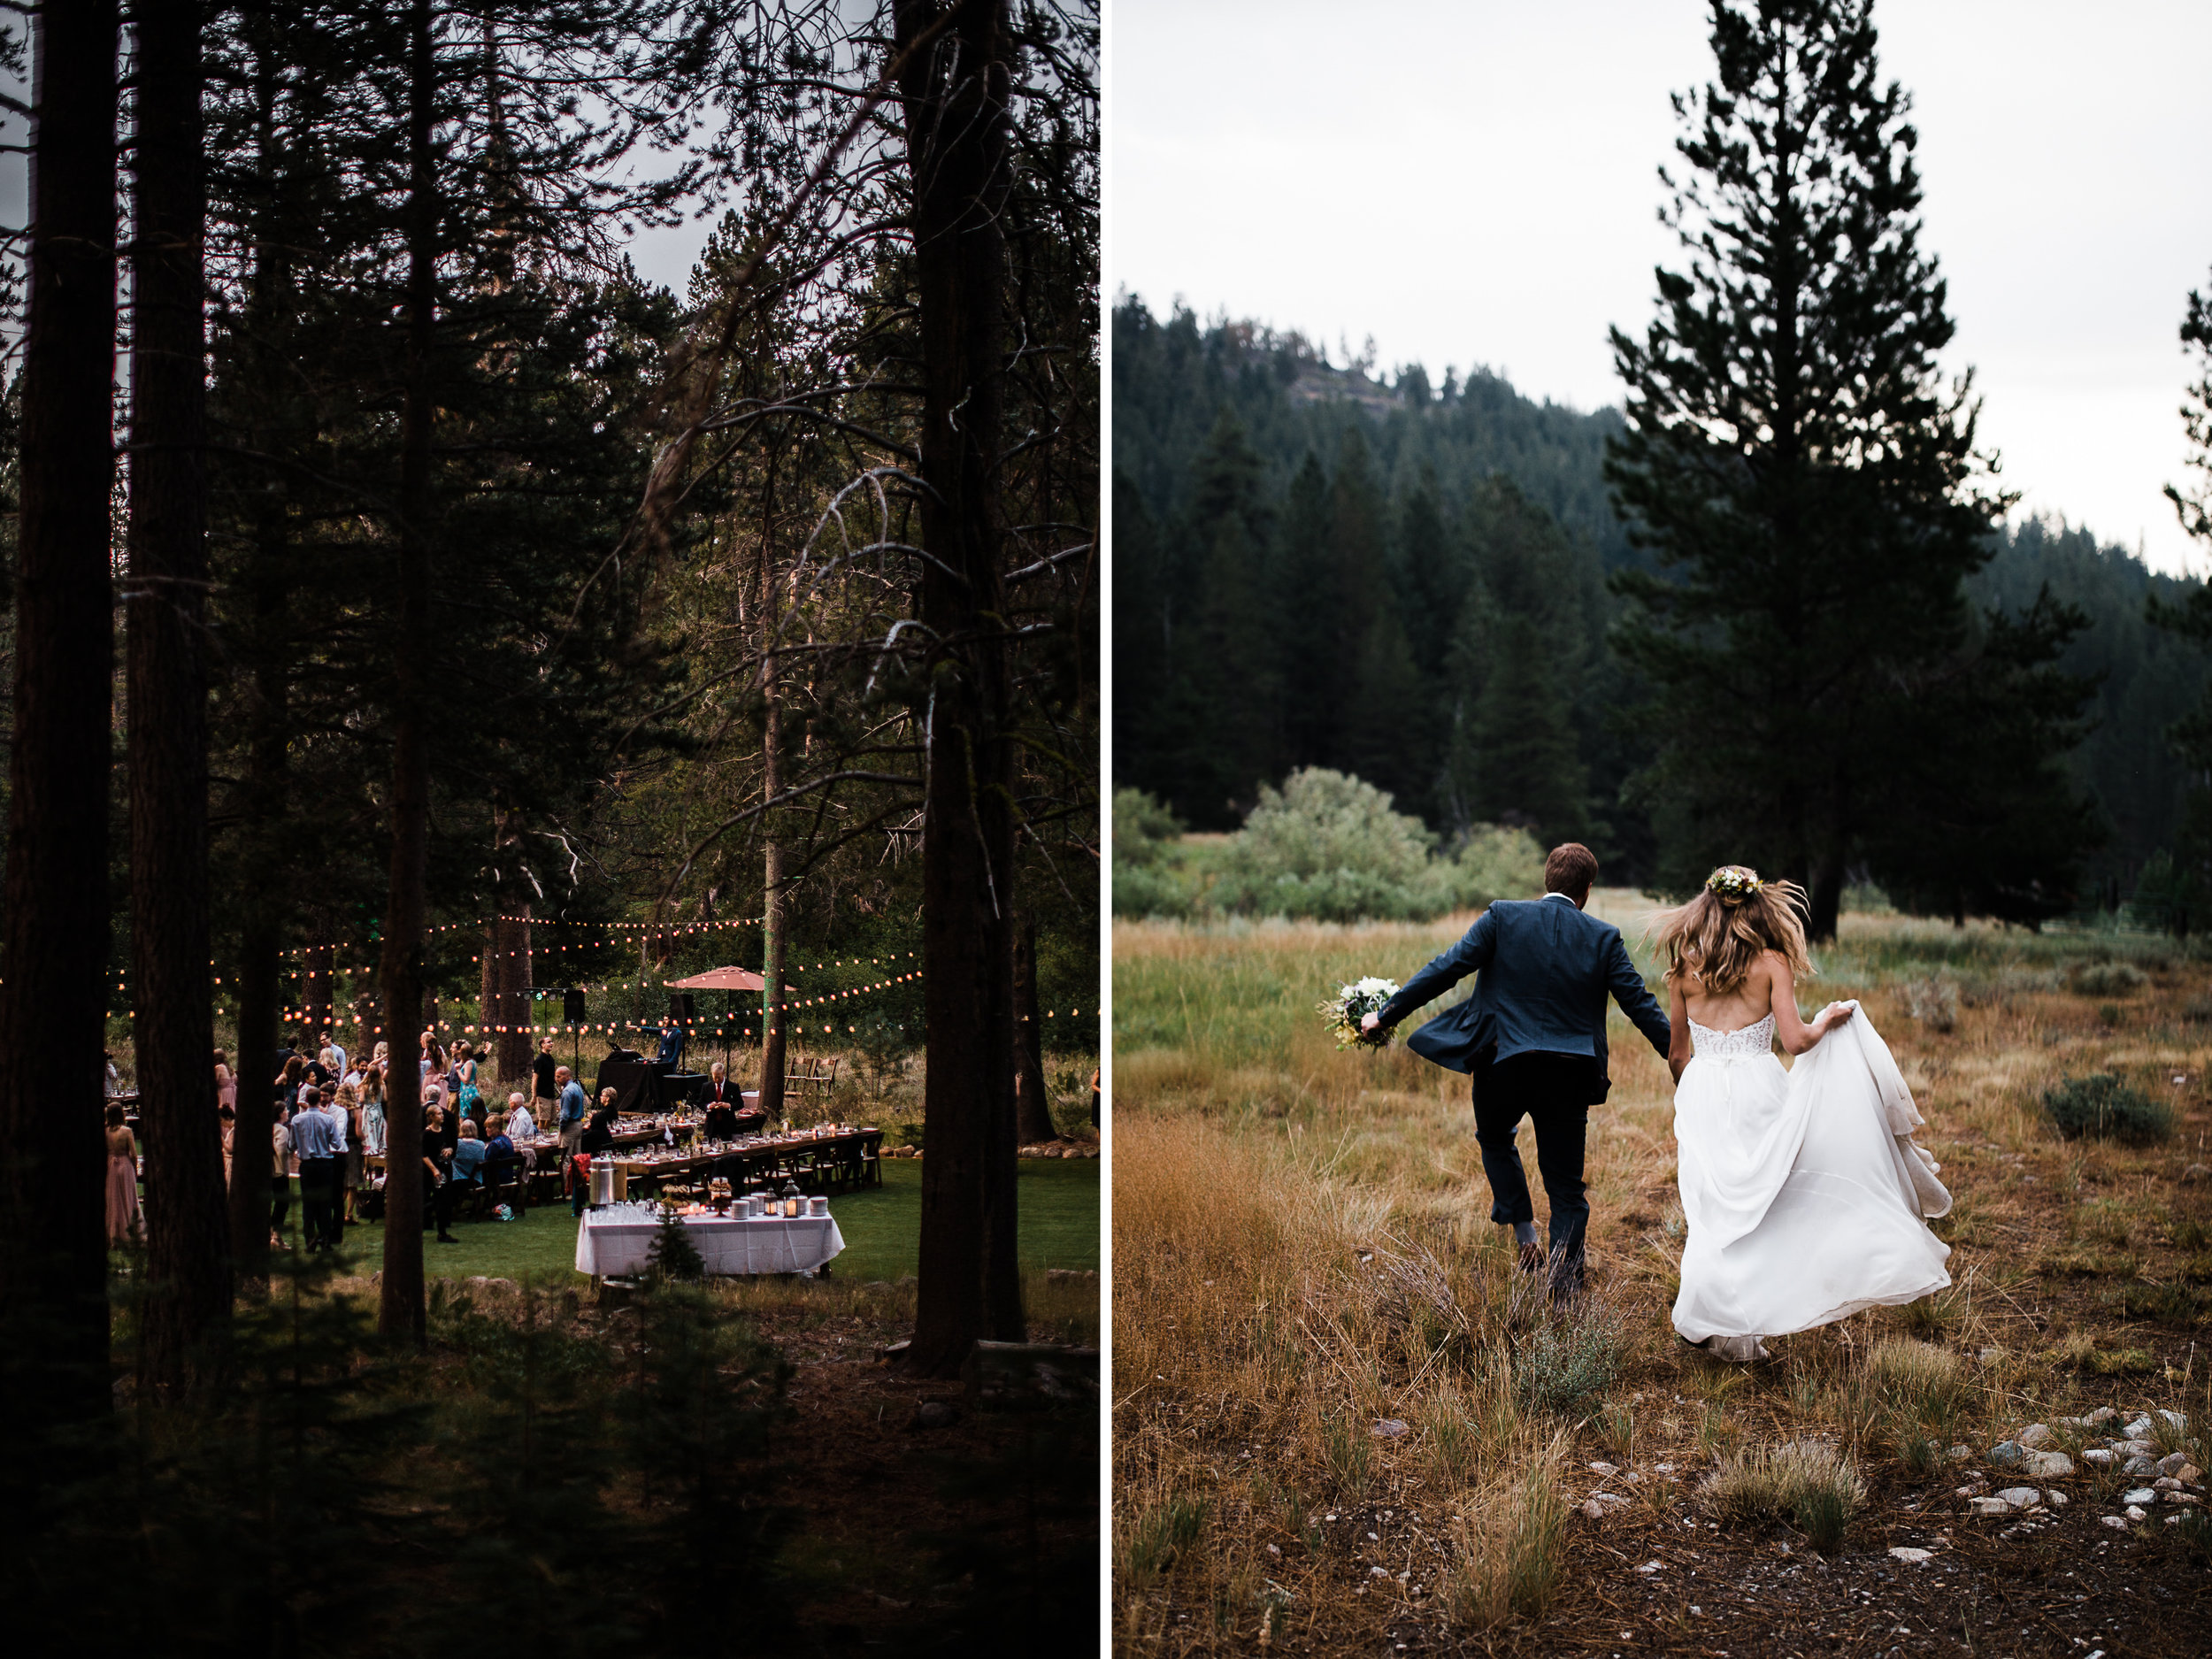 megan + zach's adventurous woodland wedding in truckee, california | romantic rainy wedding day inspiration | lake tahoe wedding photographer | www.thehearnes.com